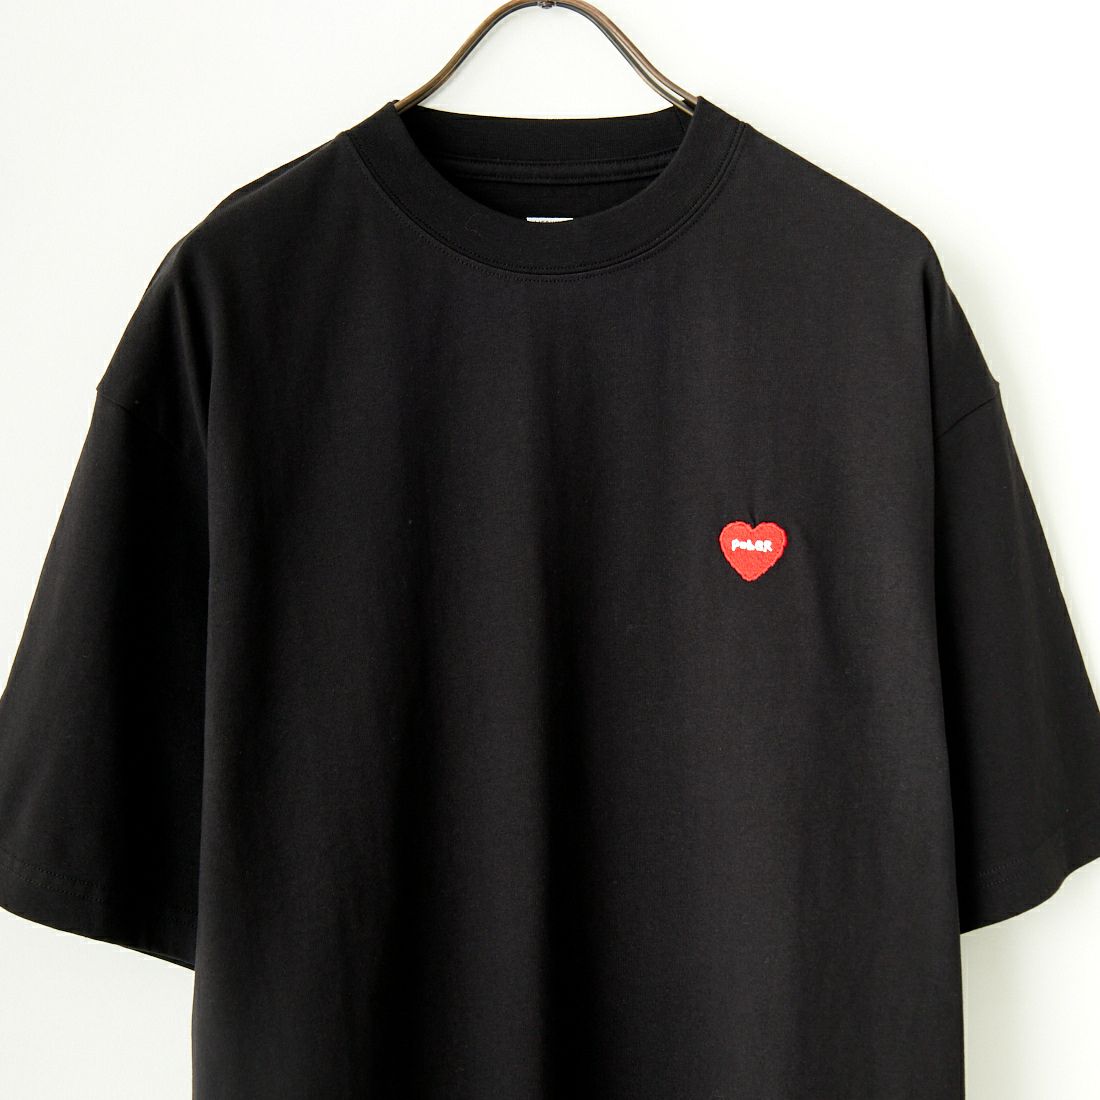 POLeR [ポーラー] 別注 FURRY HEART バックプリント ショートスリーブTシャツ [249MCV0011-JF] BLACK